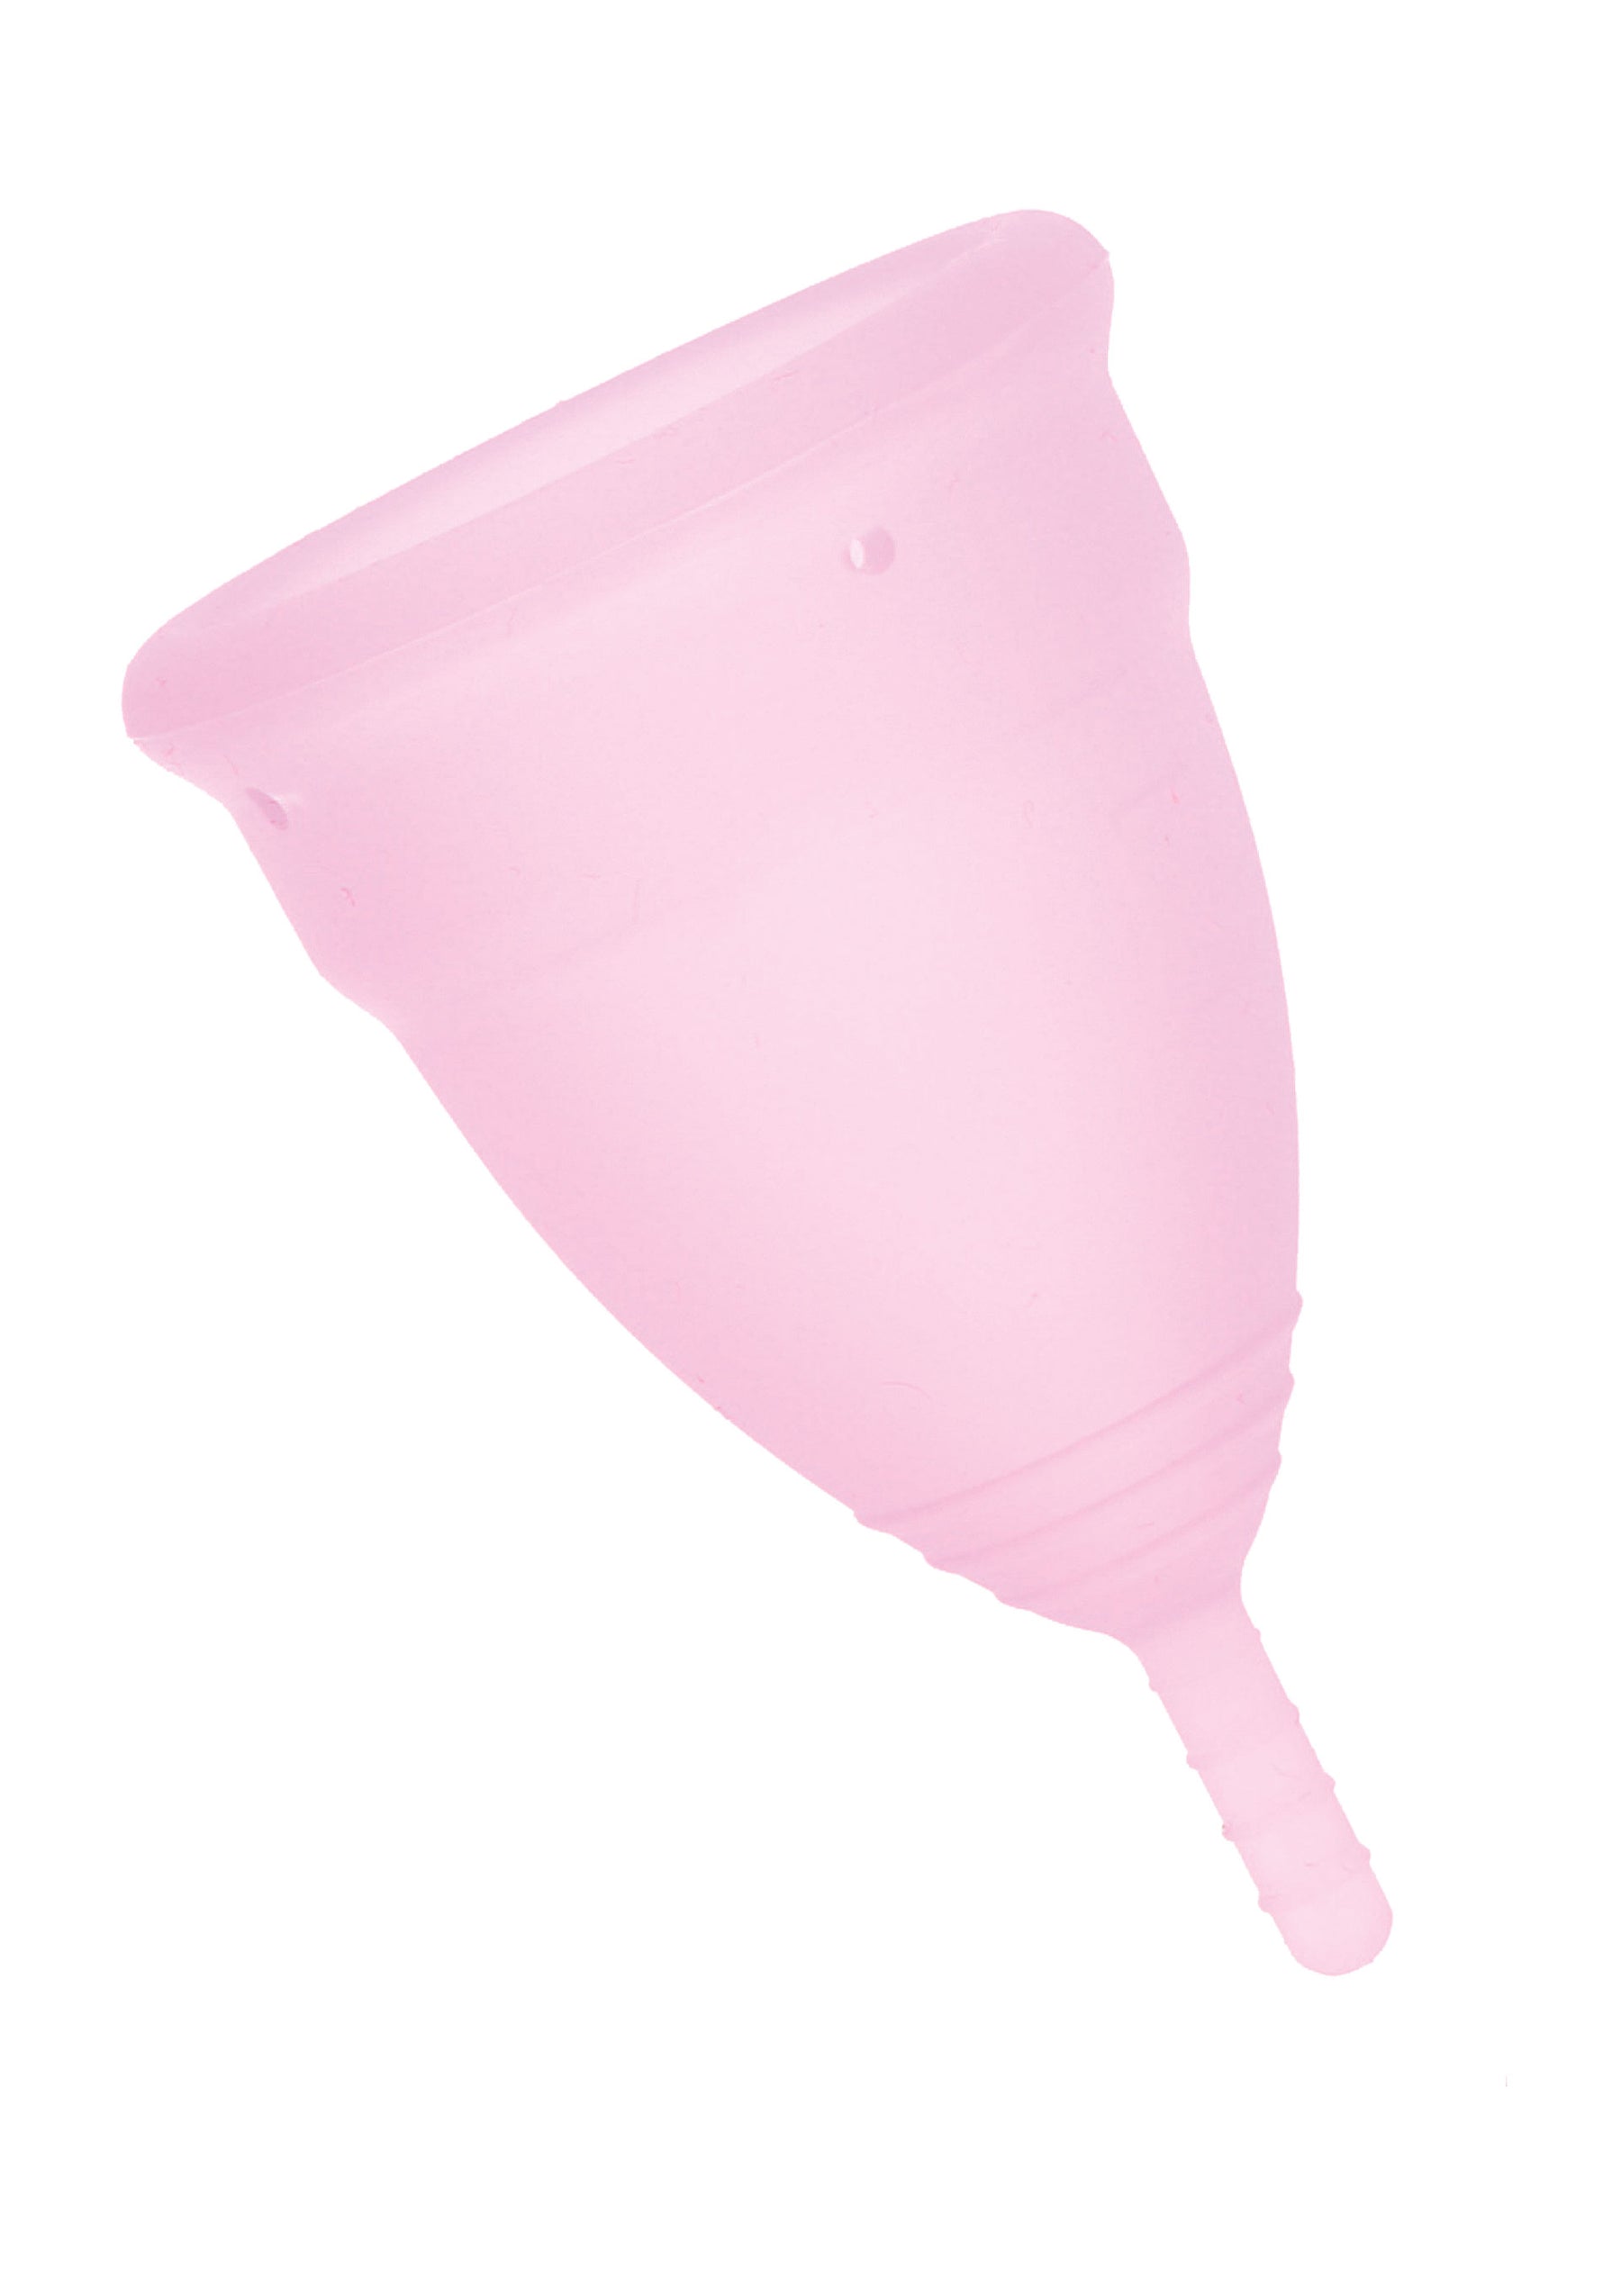 Menstrual Cups Size S-erotic-world-munchen.myshopify.com